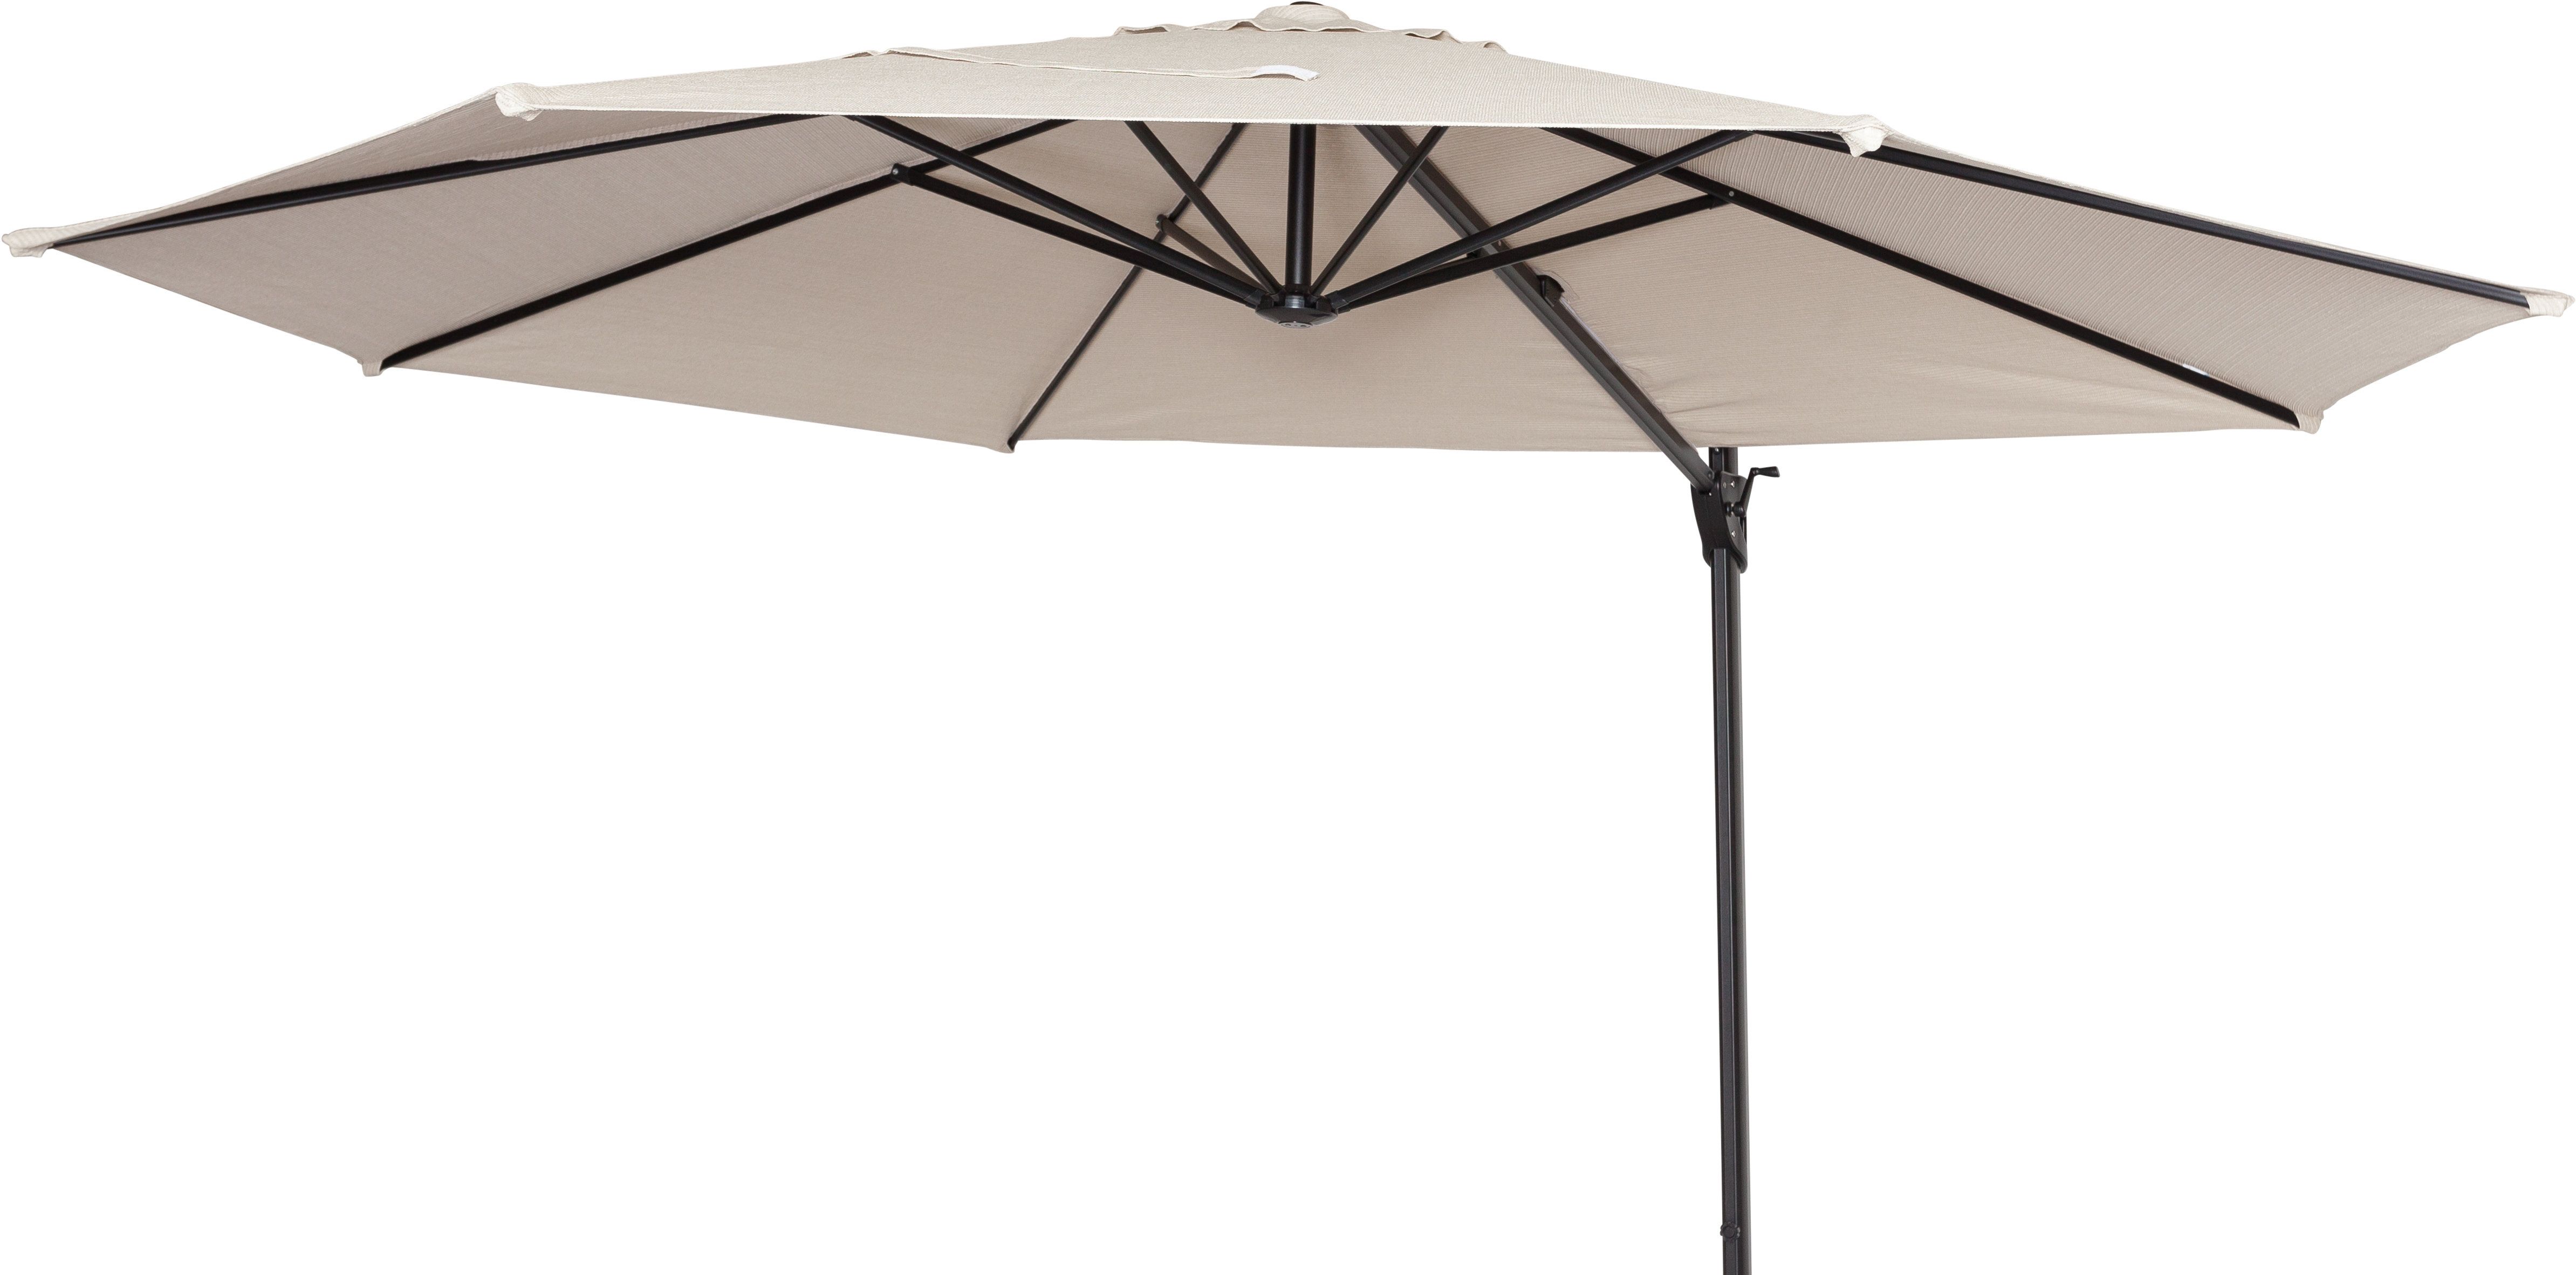 Preferred Coolaroo 12' Cantilever Umbrella For Mablethorpe Cantilever Umbrellas (View 17 of 20)